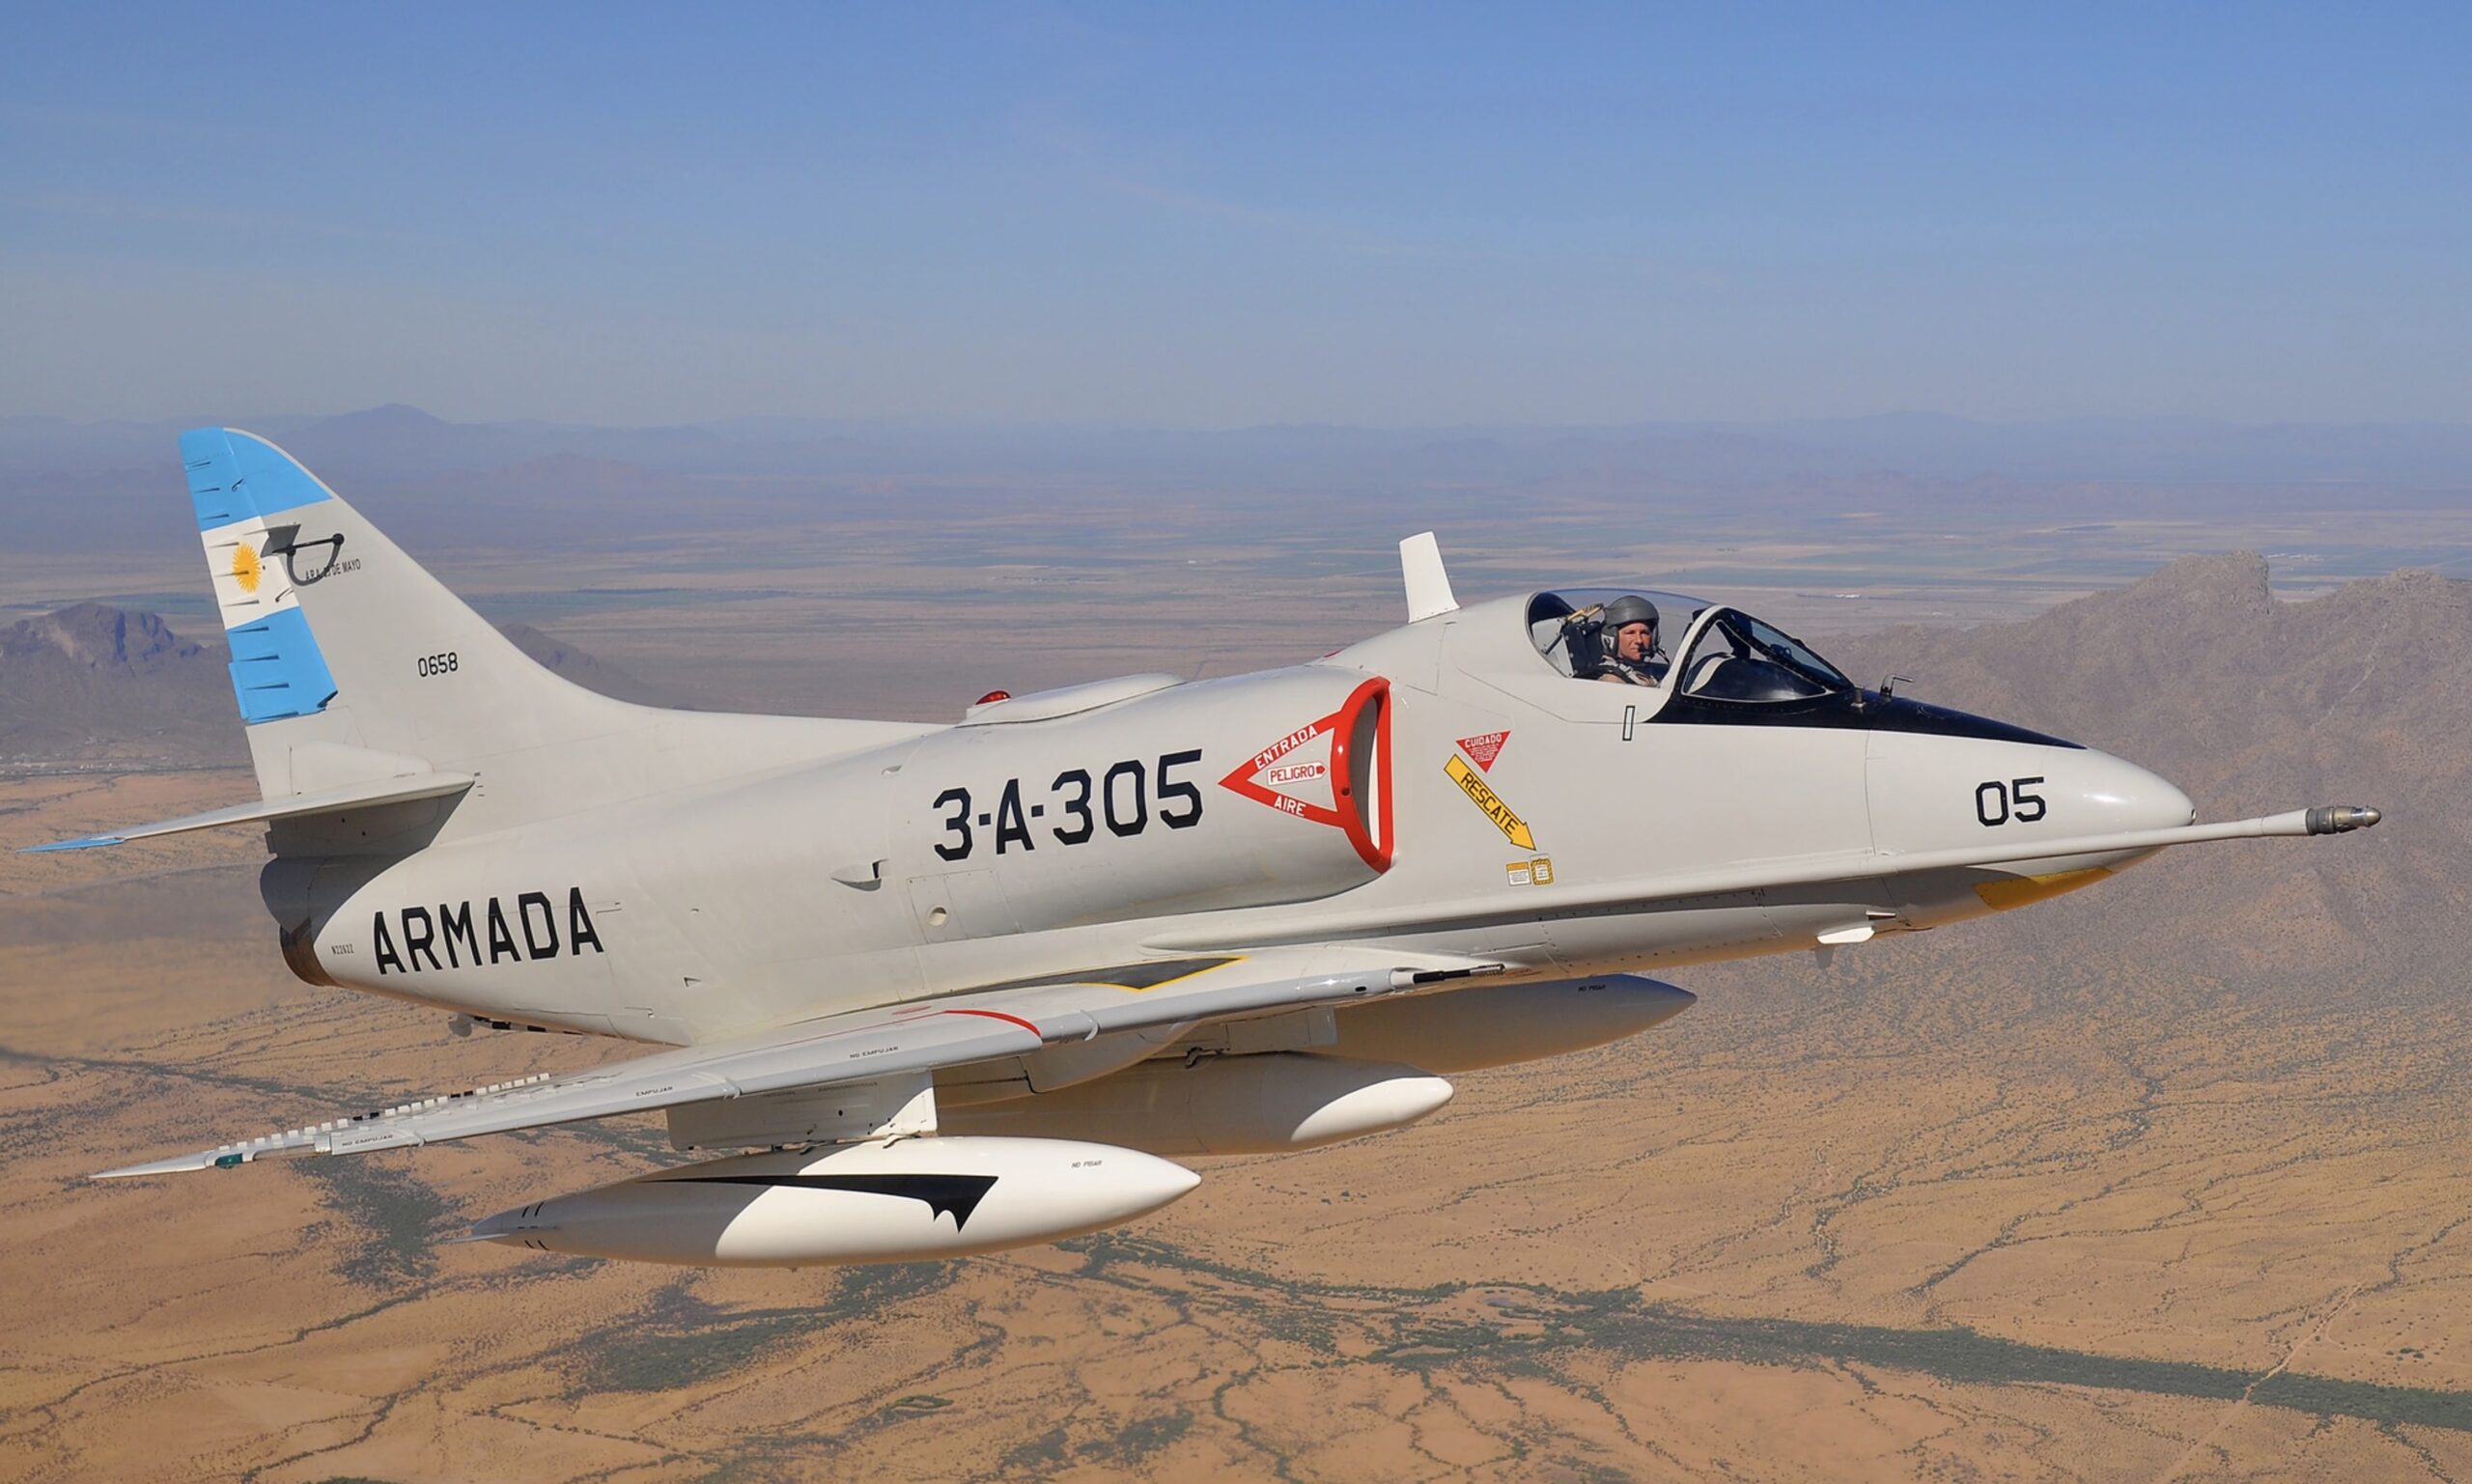 For Sale: A Douglas A-4 Skyhawk Fighter Jet